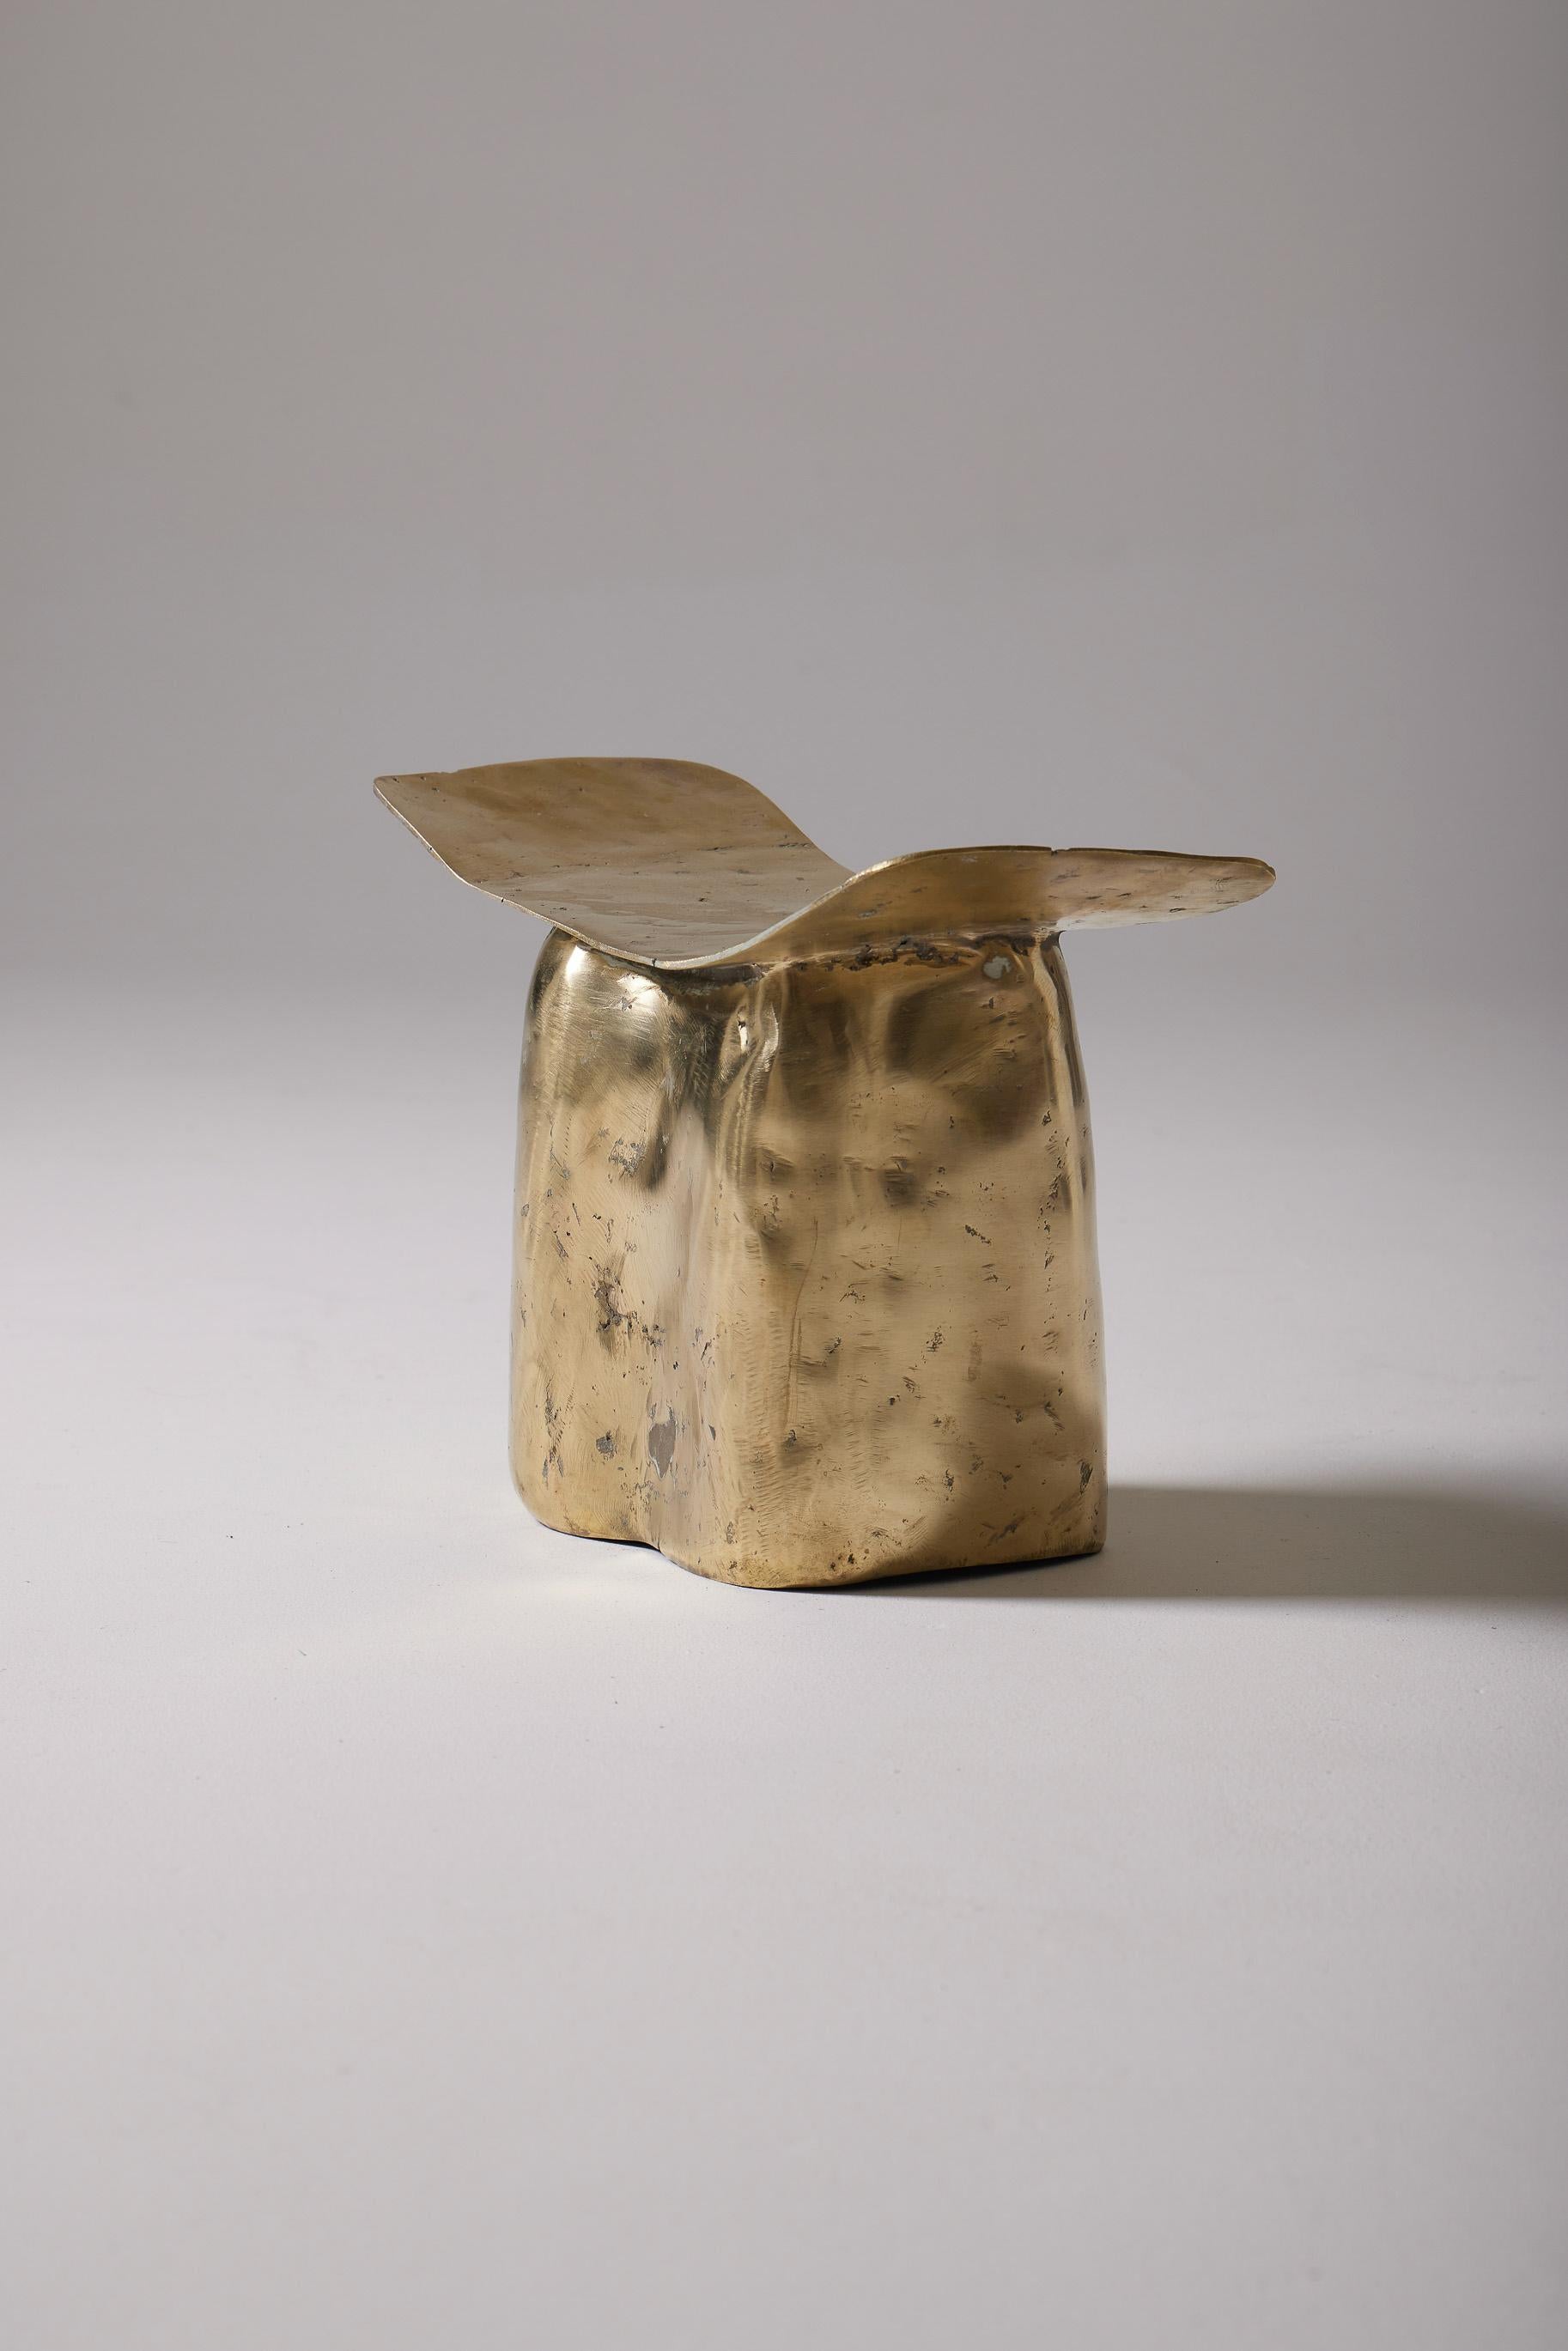 Golden Senufo metal stool. Unique piece. Very good condition.
LP3028